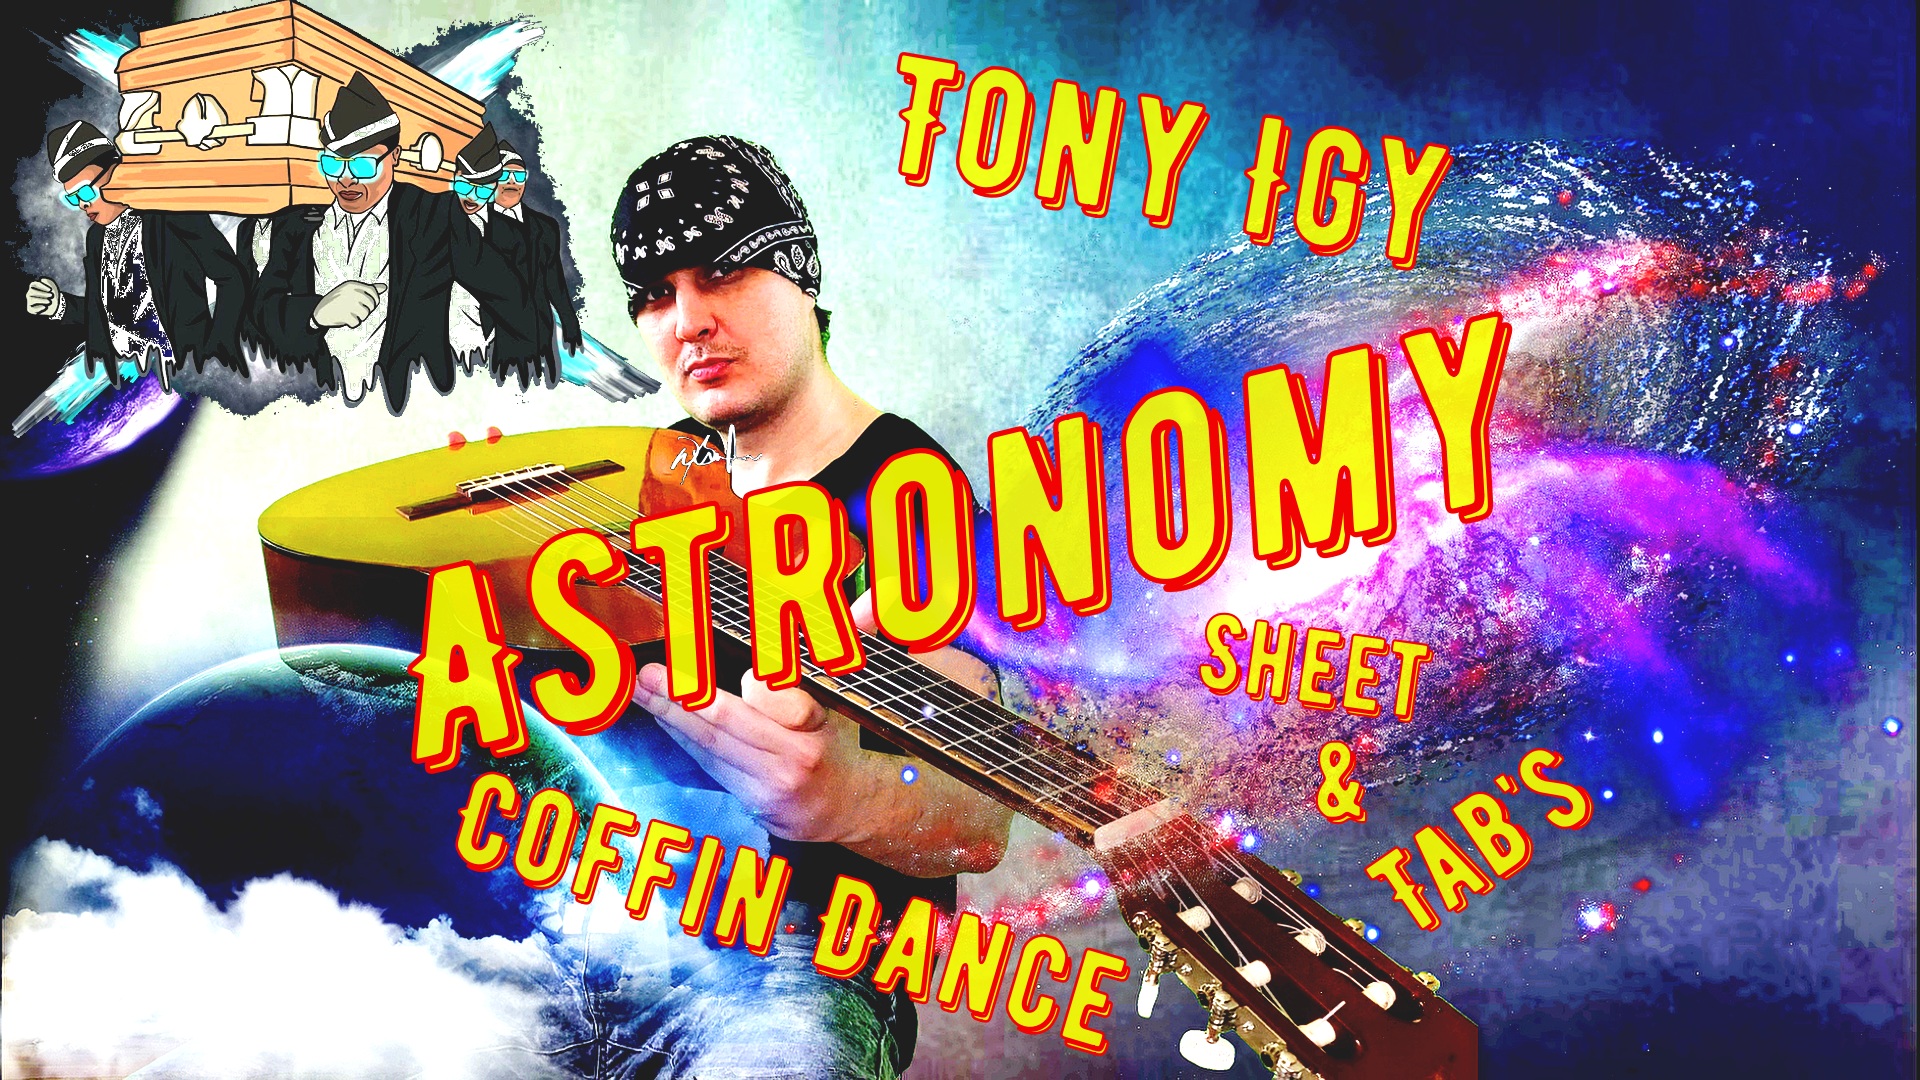 Astronomia coffin. Тони иги астрономия на гитаре. Tony igy Astronomia. Tony igy Astronomia табы. Песня Astronomy Coffin Dance.